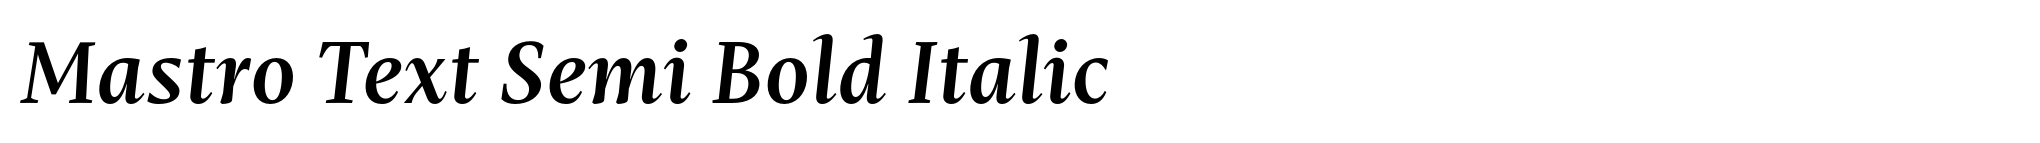 Mastro Text Semi Bold Italic image